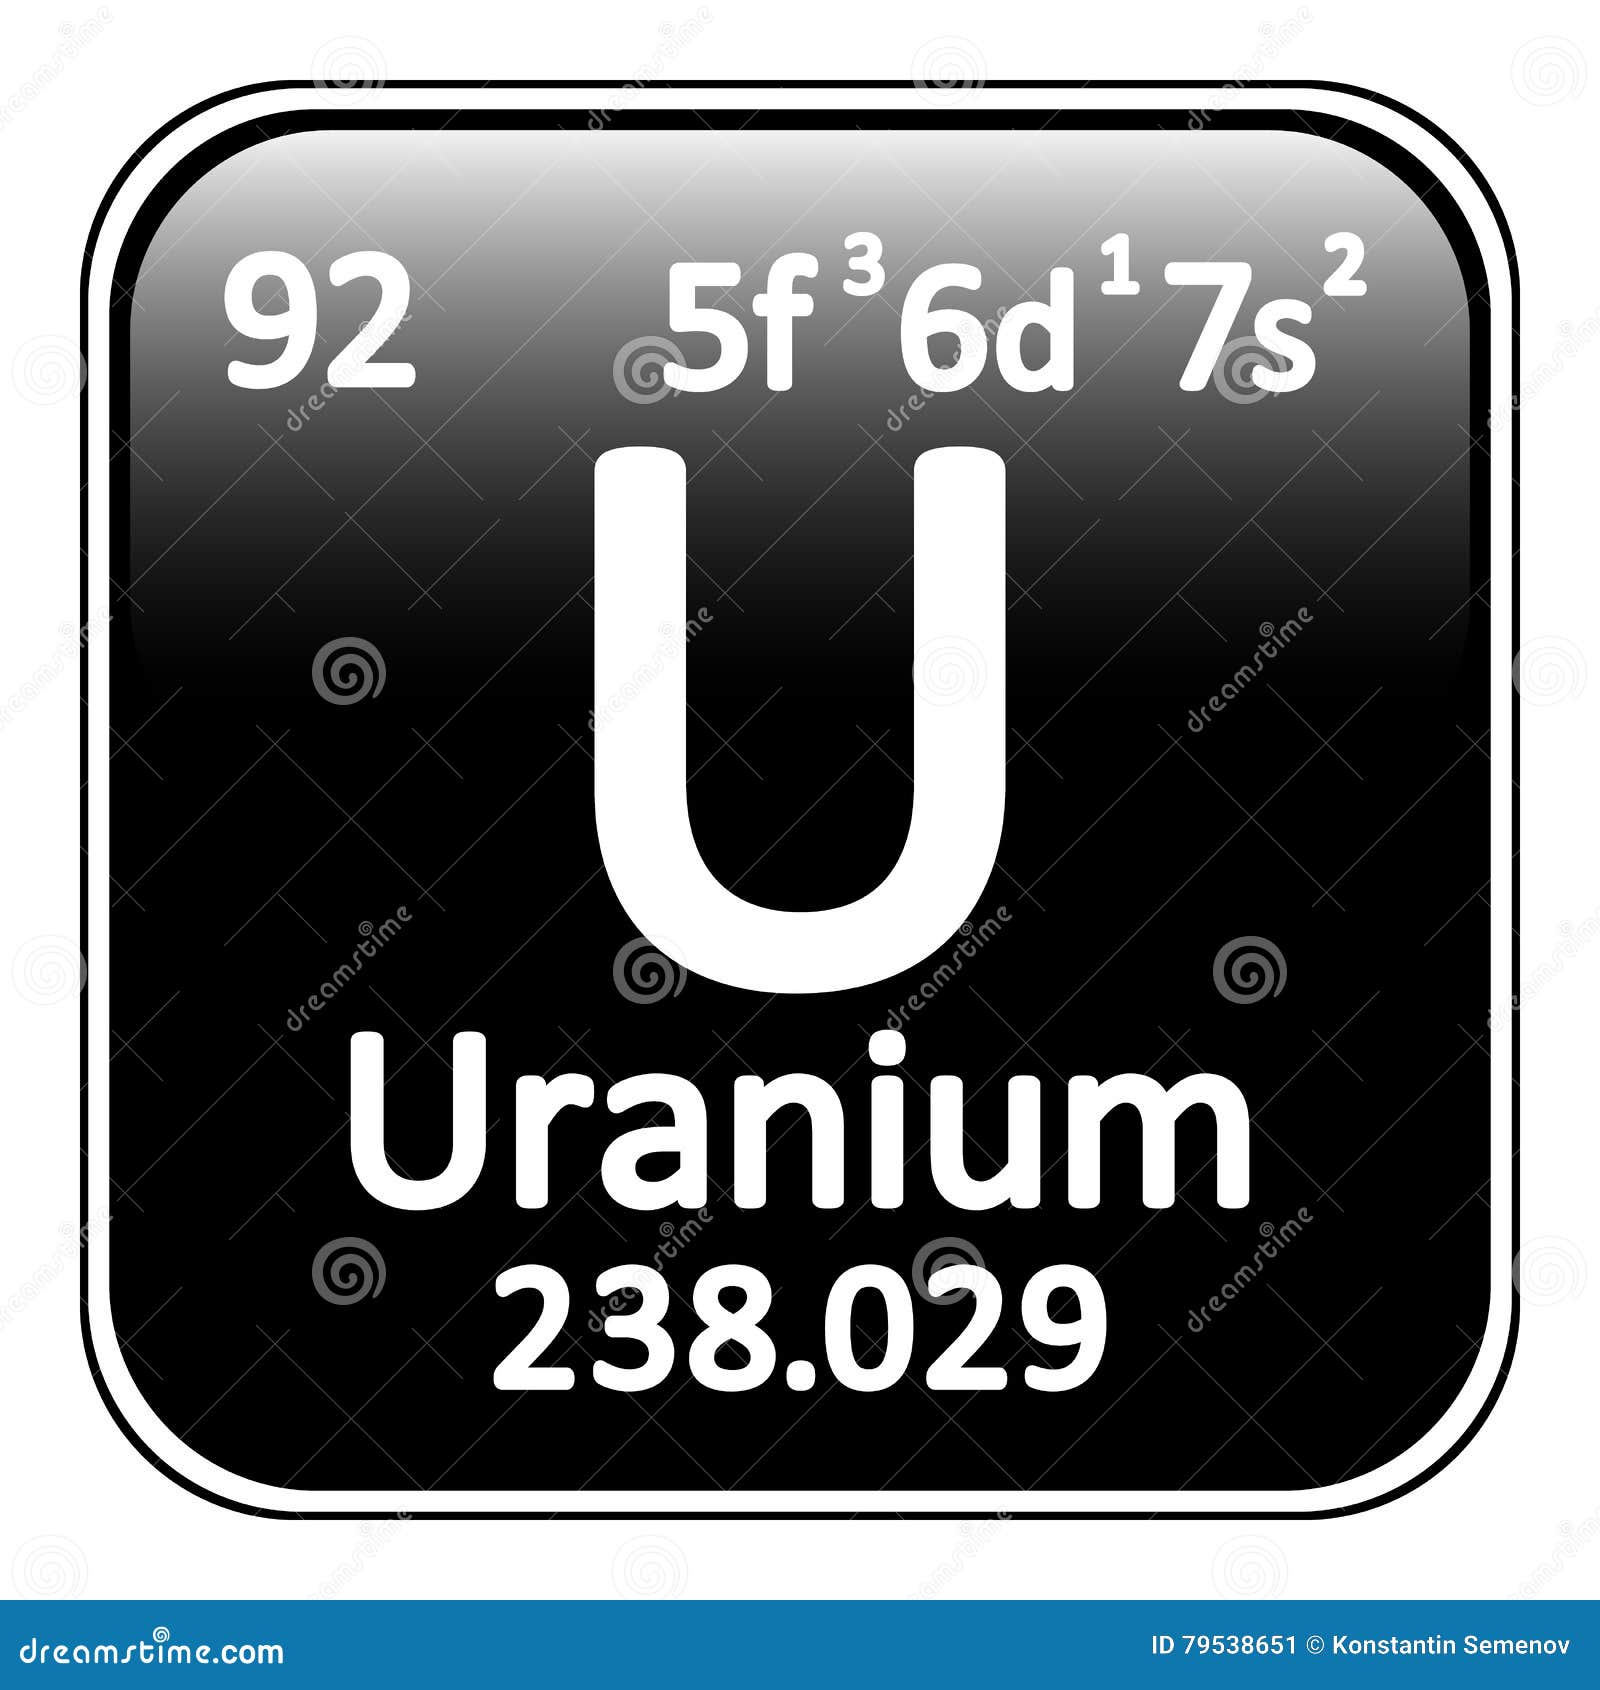 Icono Del Uranio Del Elemento De Tabla Peri dica Stock de ilustraci n  Ilustraci n de fondo  